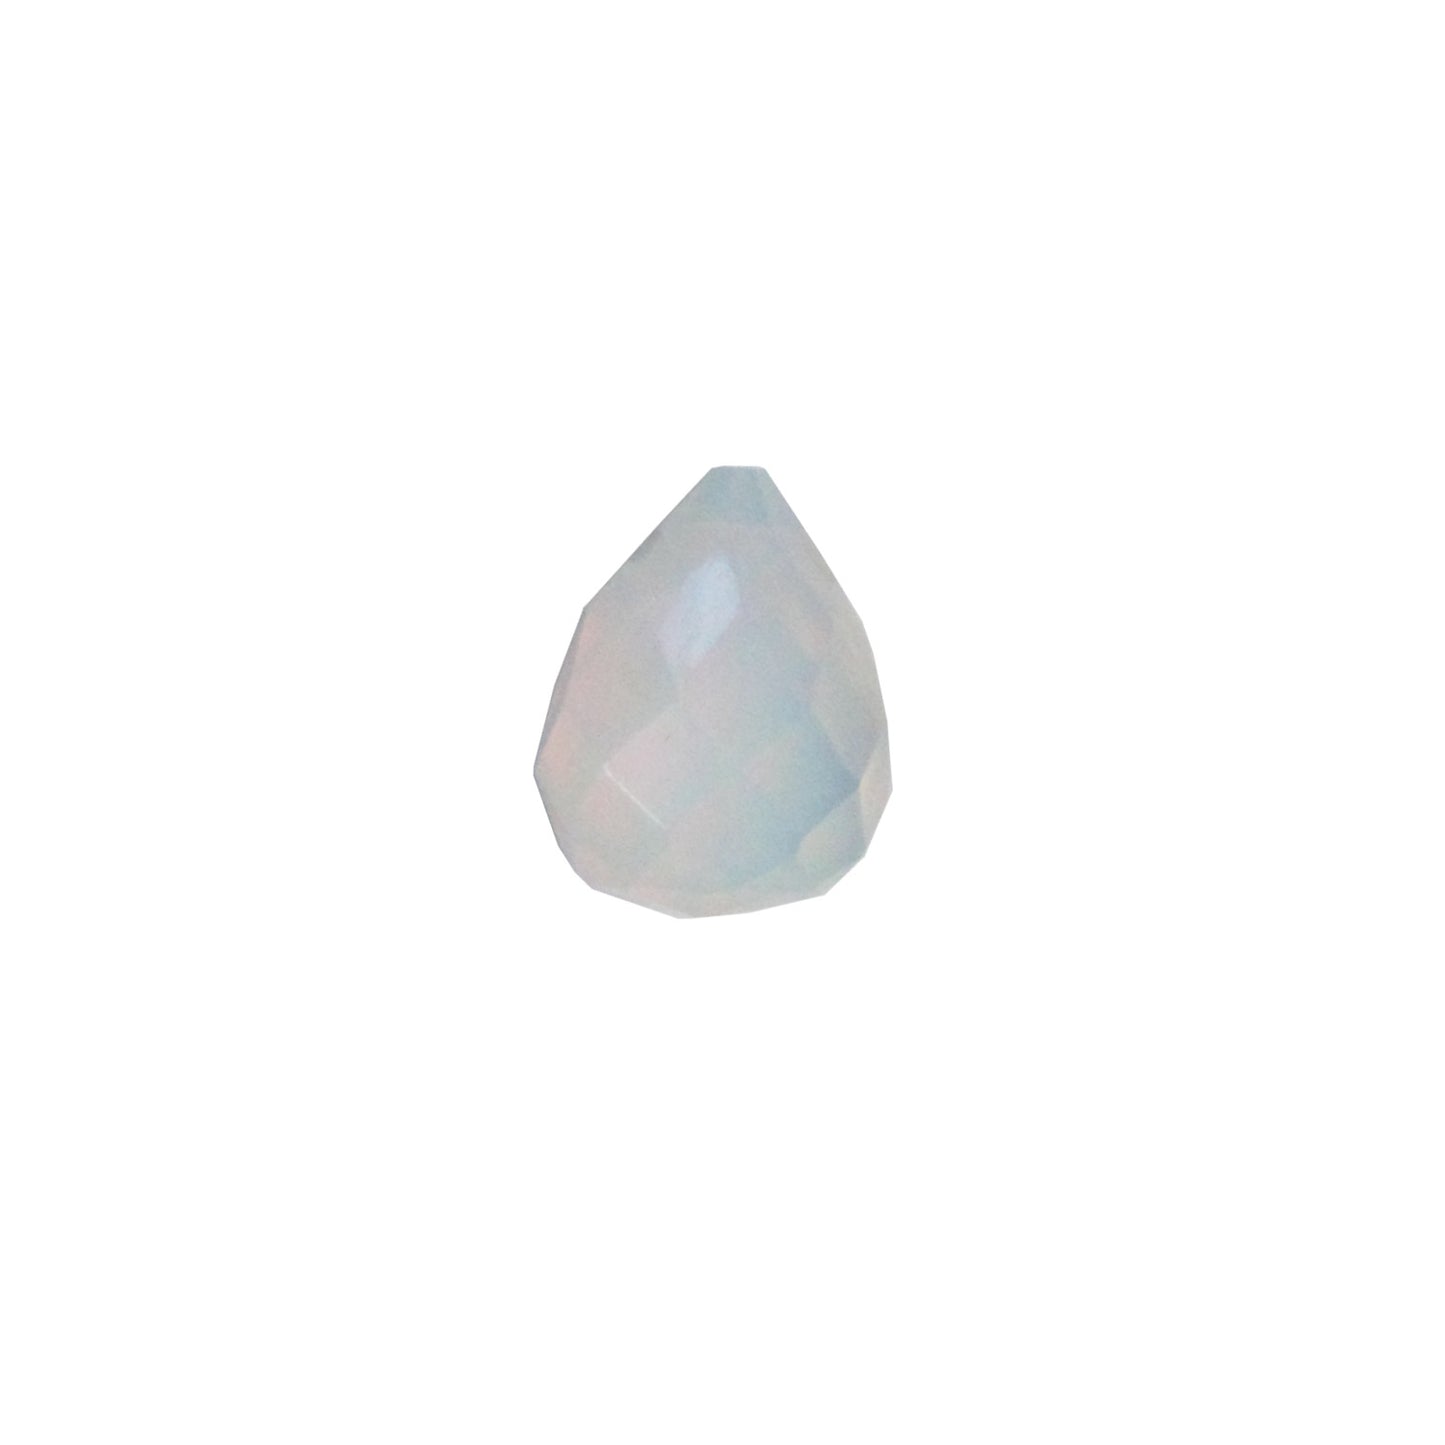 Moonstone Faceted Teardrop / 12 x 10mm / man-made semi-translucent stone bead